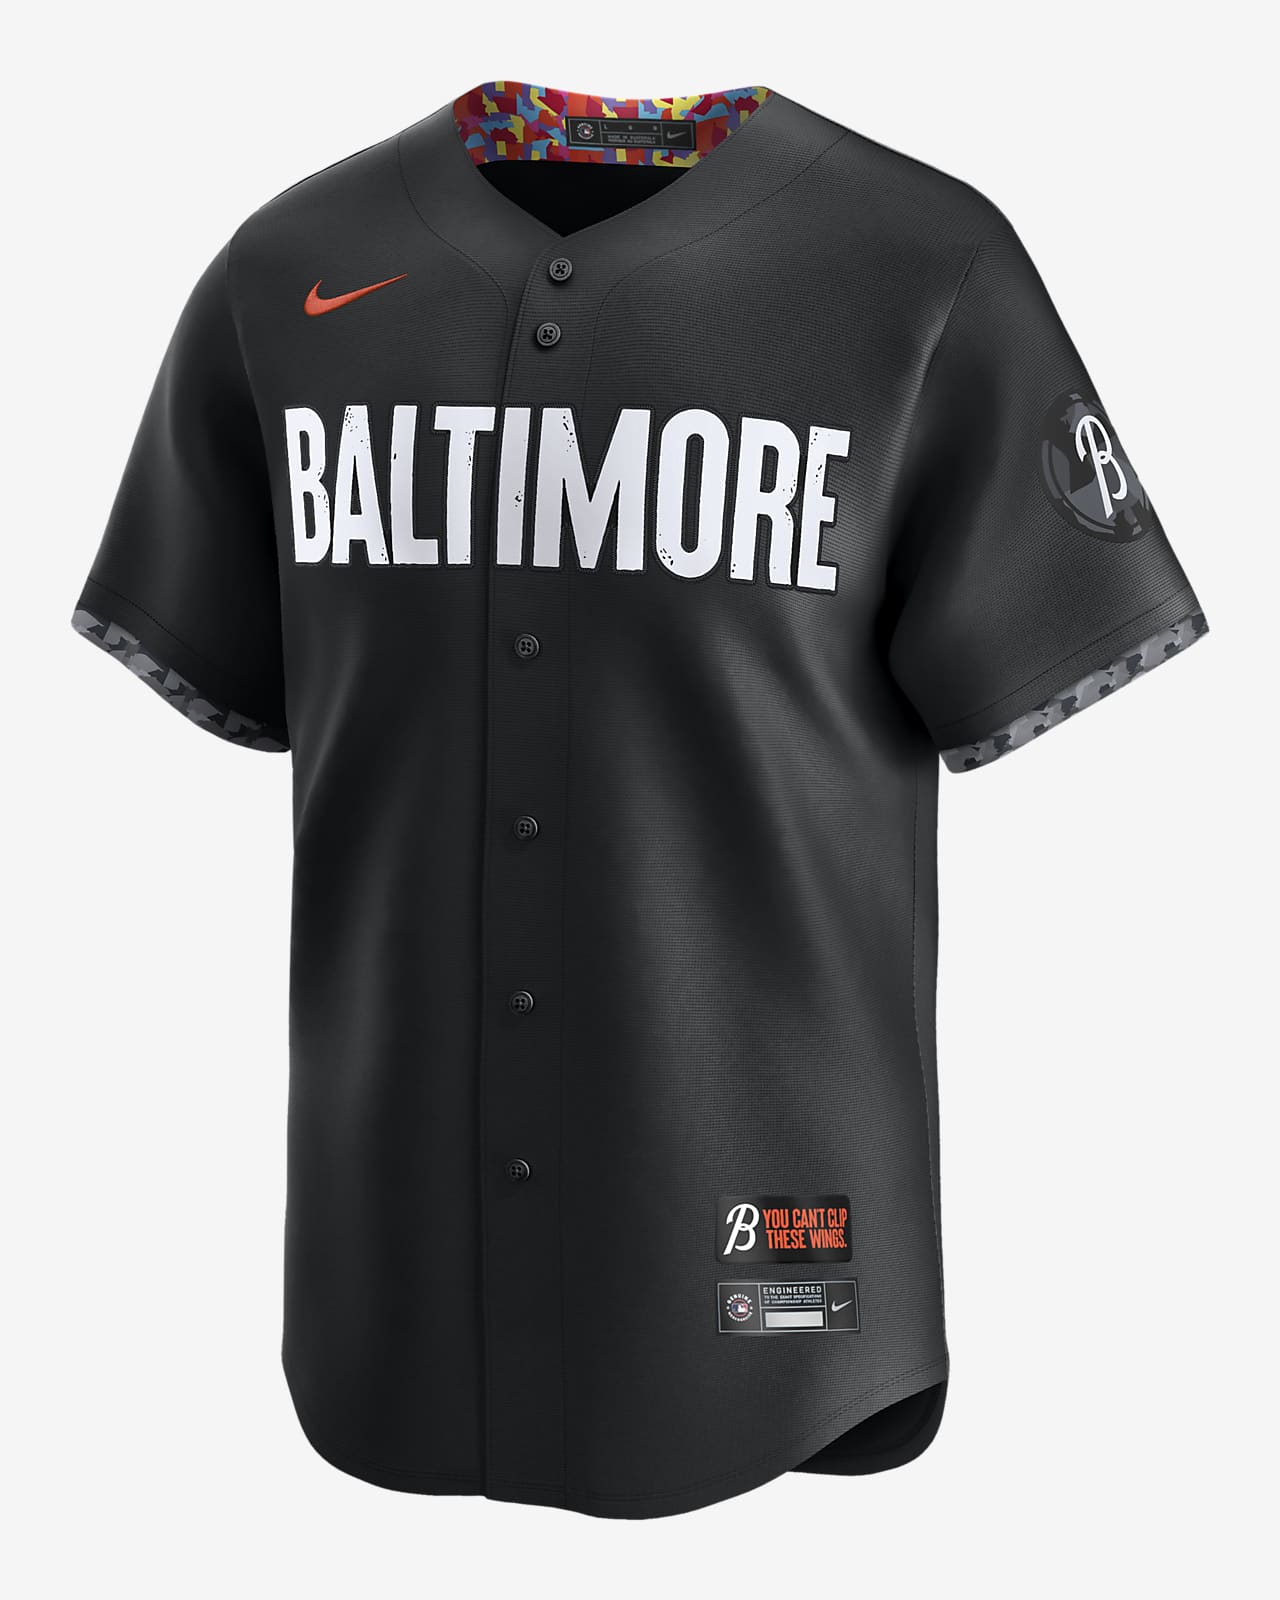 Jersey Nike Dri-FIT ADV de la MLB para hombre Adley Rutschman Orioles de Baltimore City Connect